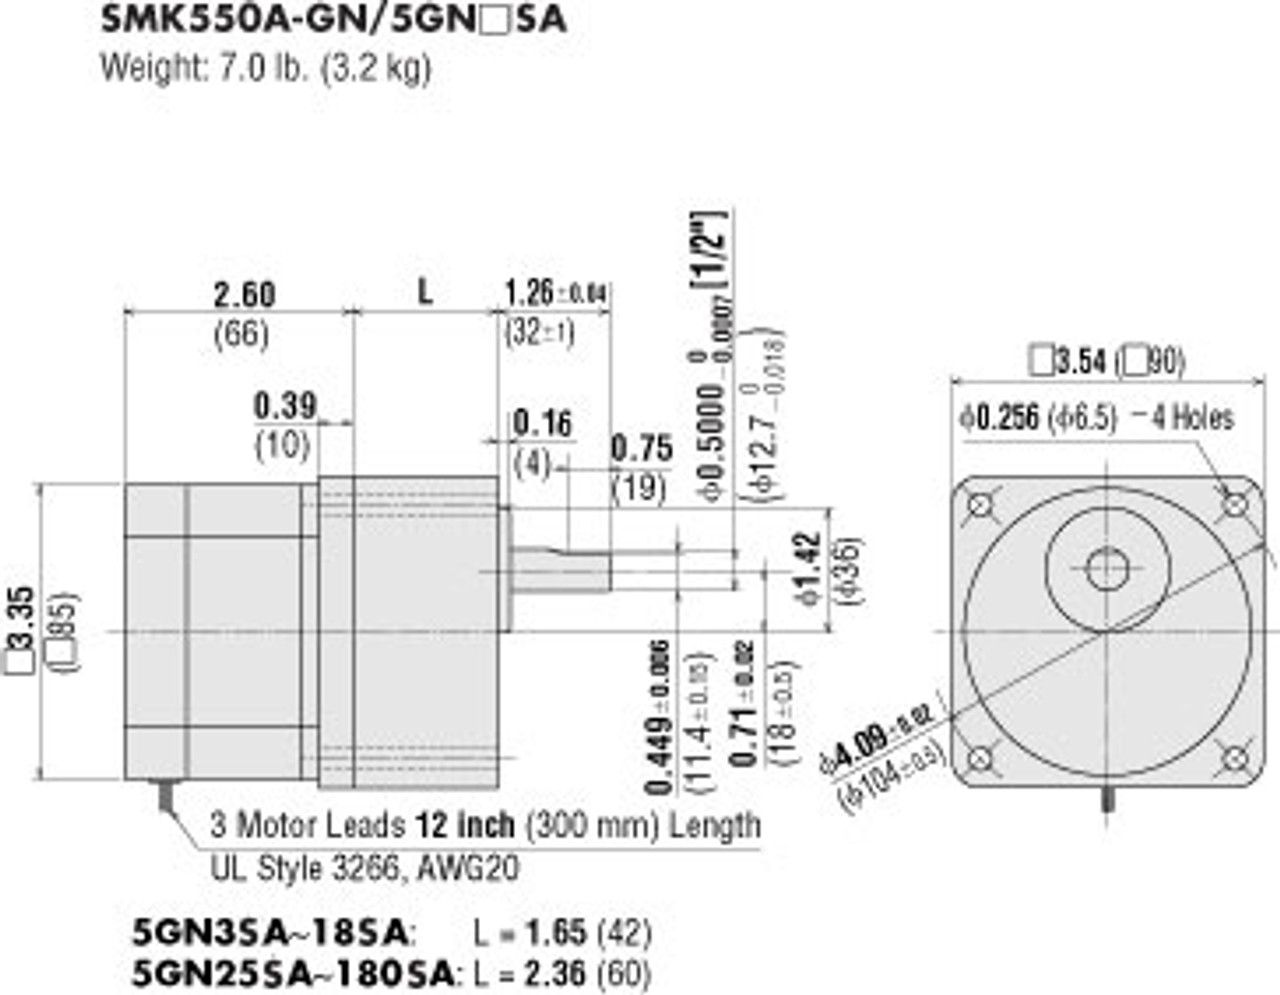 SMK550A-GN / 5GN60SA - Dimensions